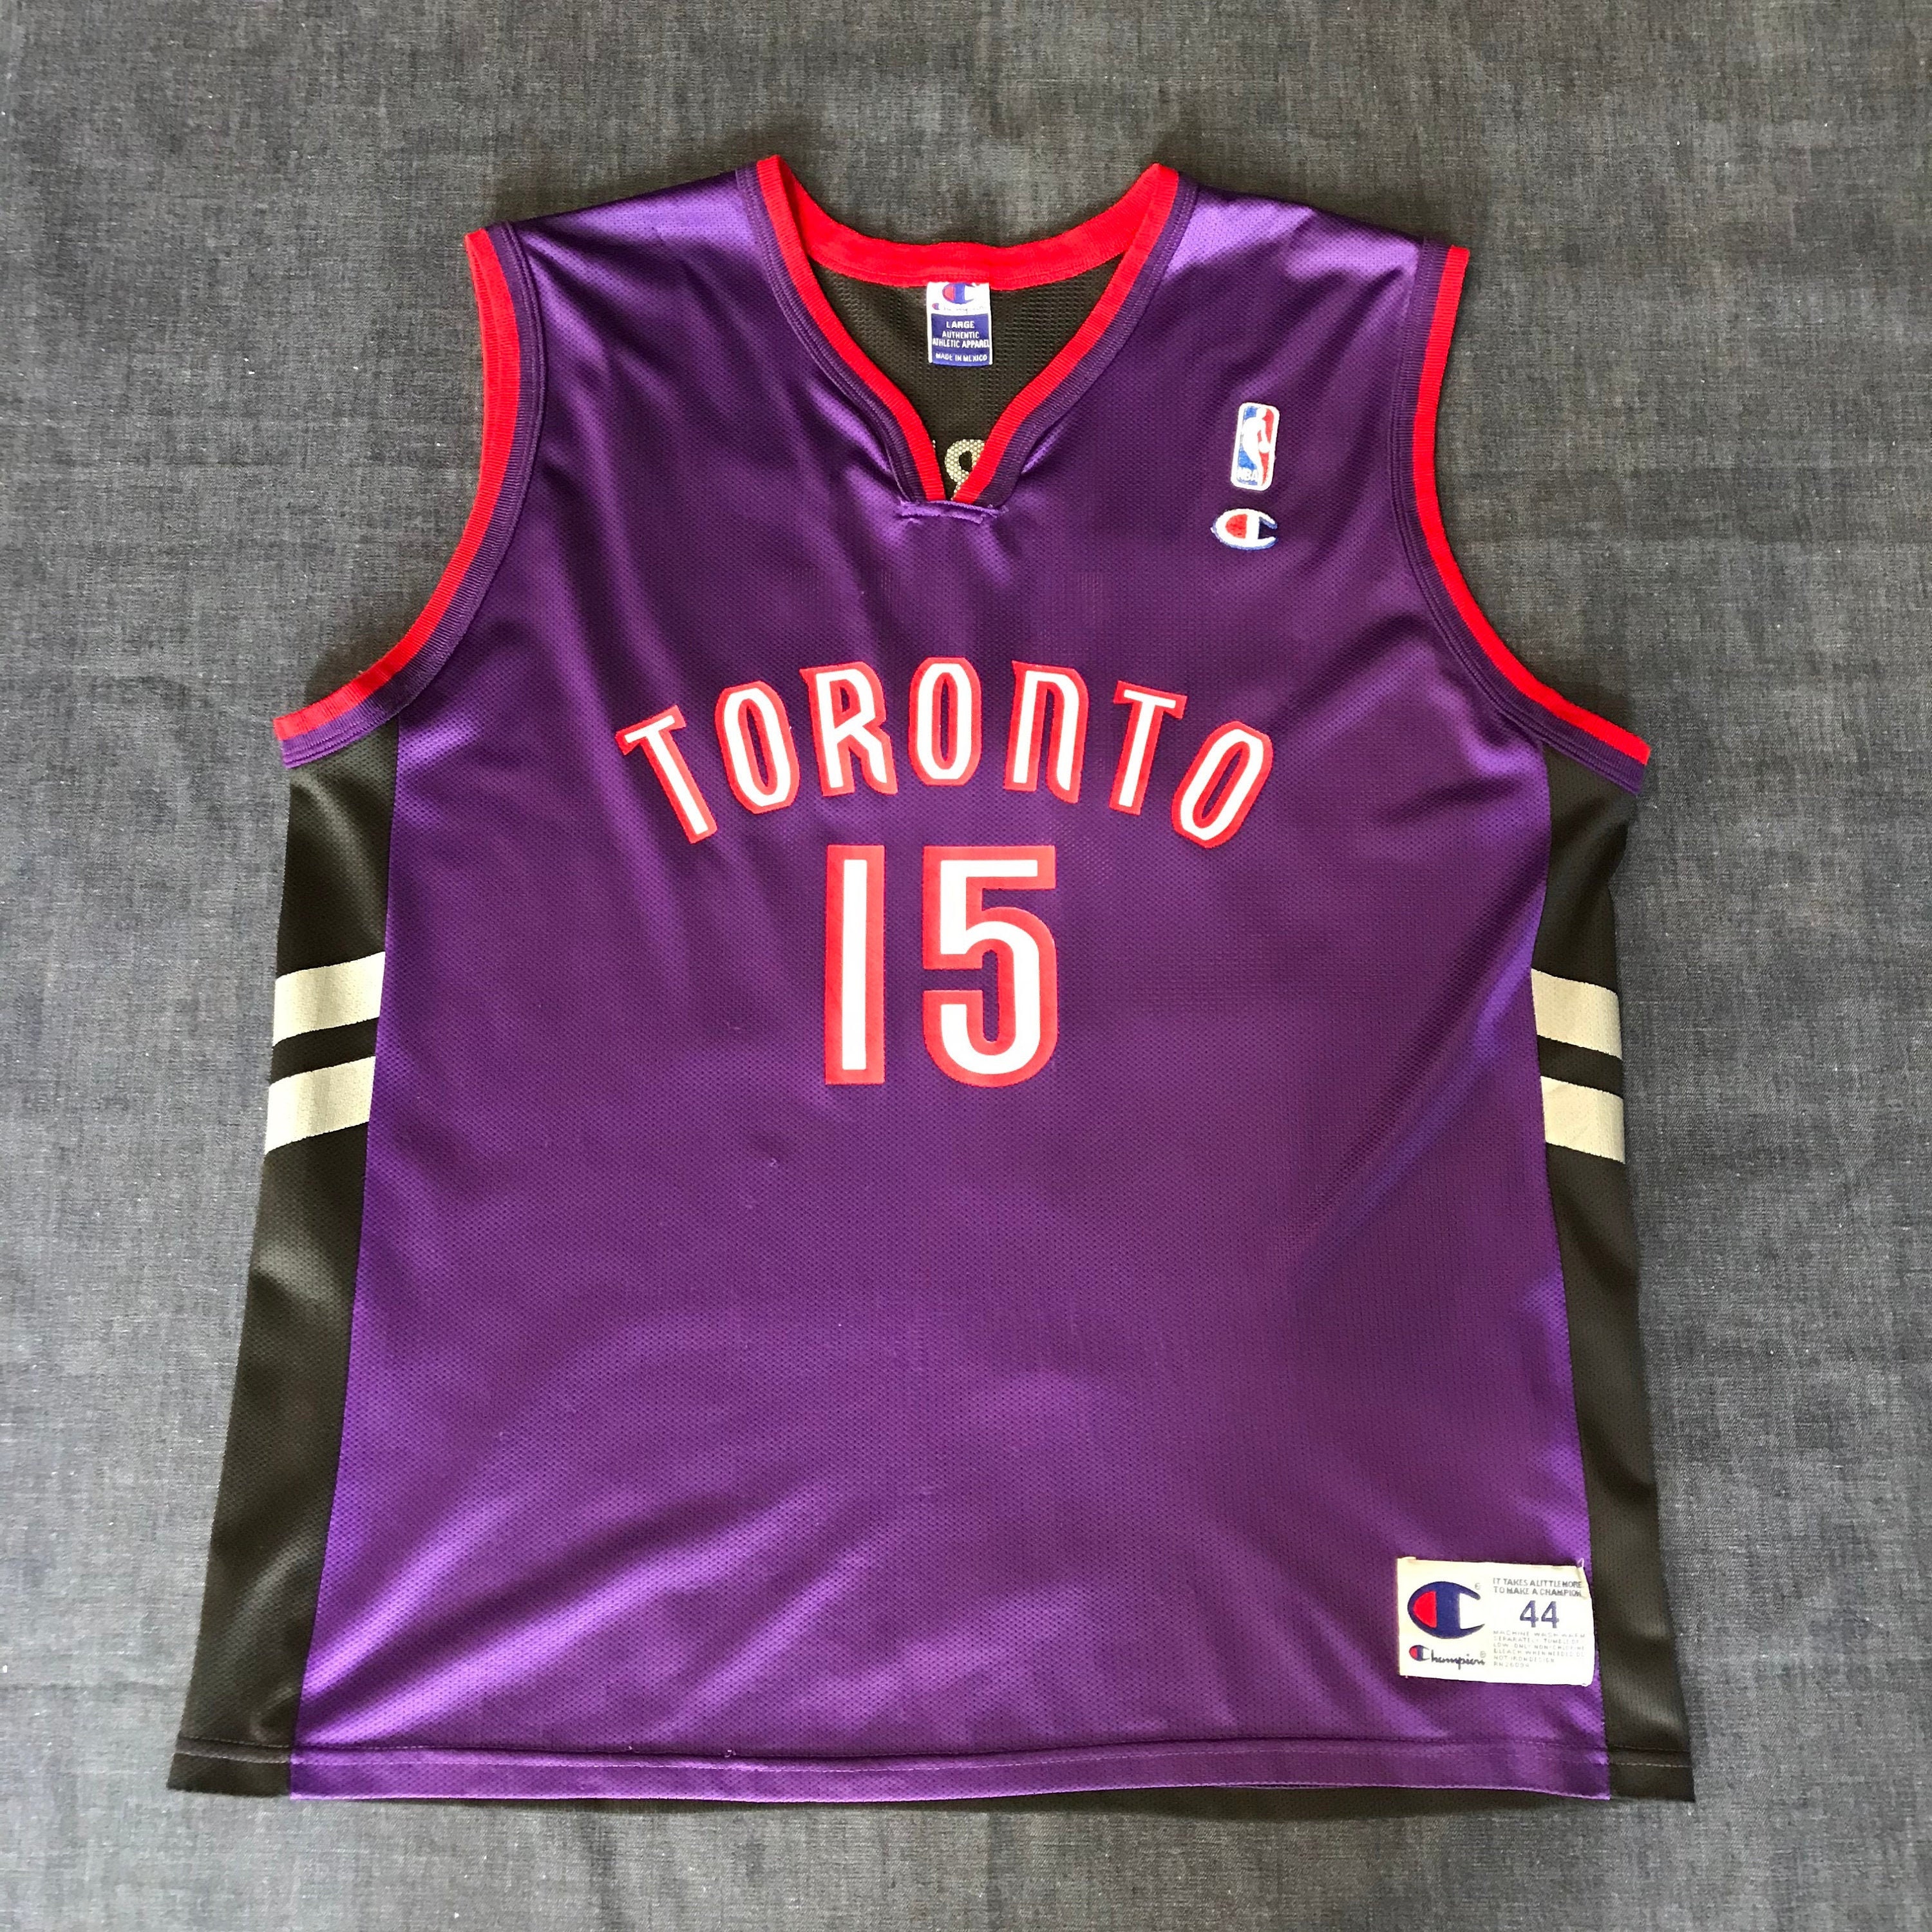 vtg VINCE CARTER #15 Toronto Raptors JERSEY sz 44 & 48 nba 90s/00s  purple black